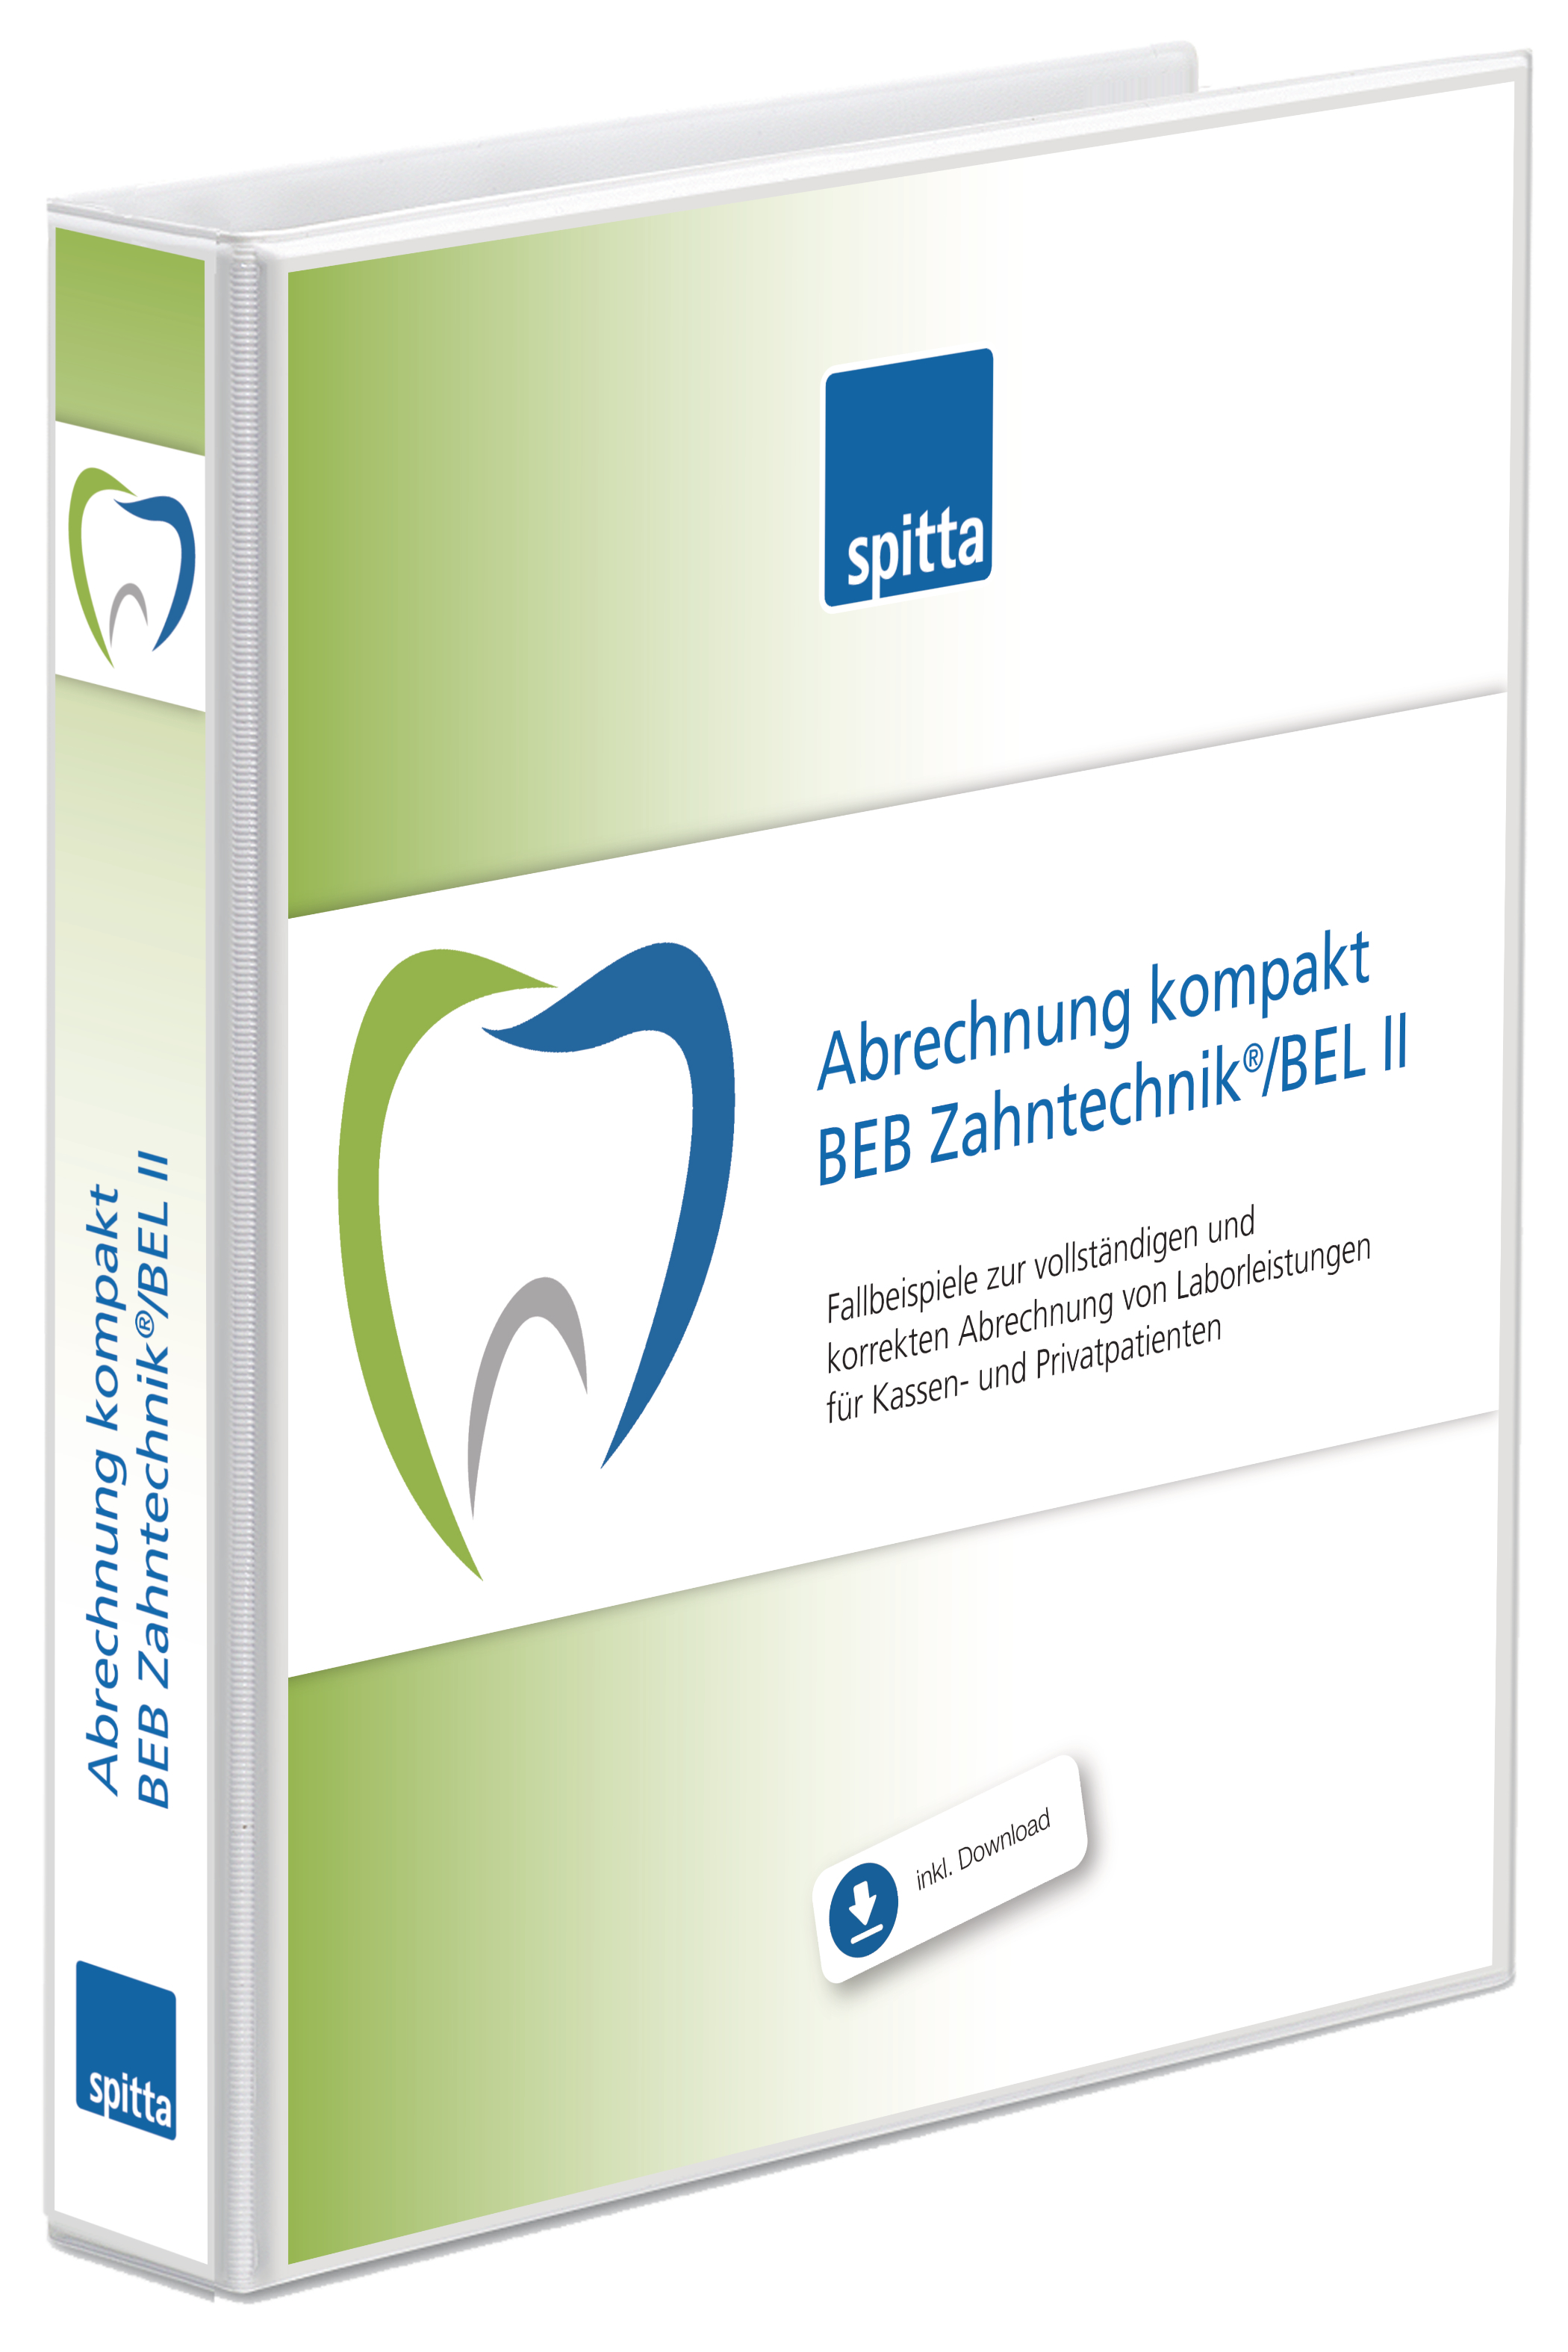 Abrechnung kompakt BEB Zahntechnik® / BEL II - Produkt